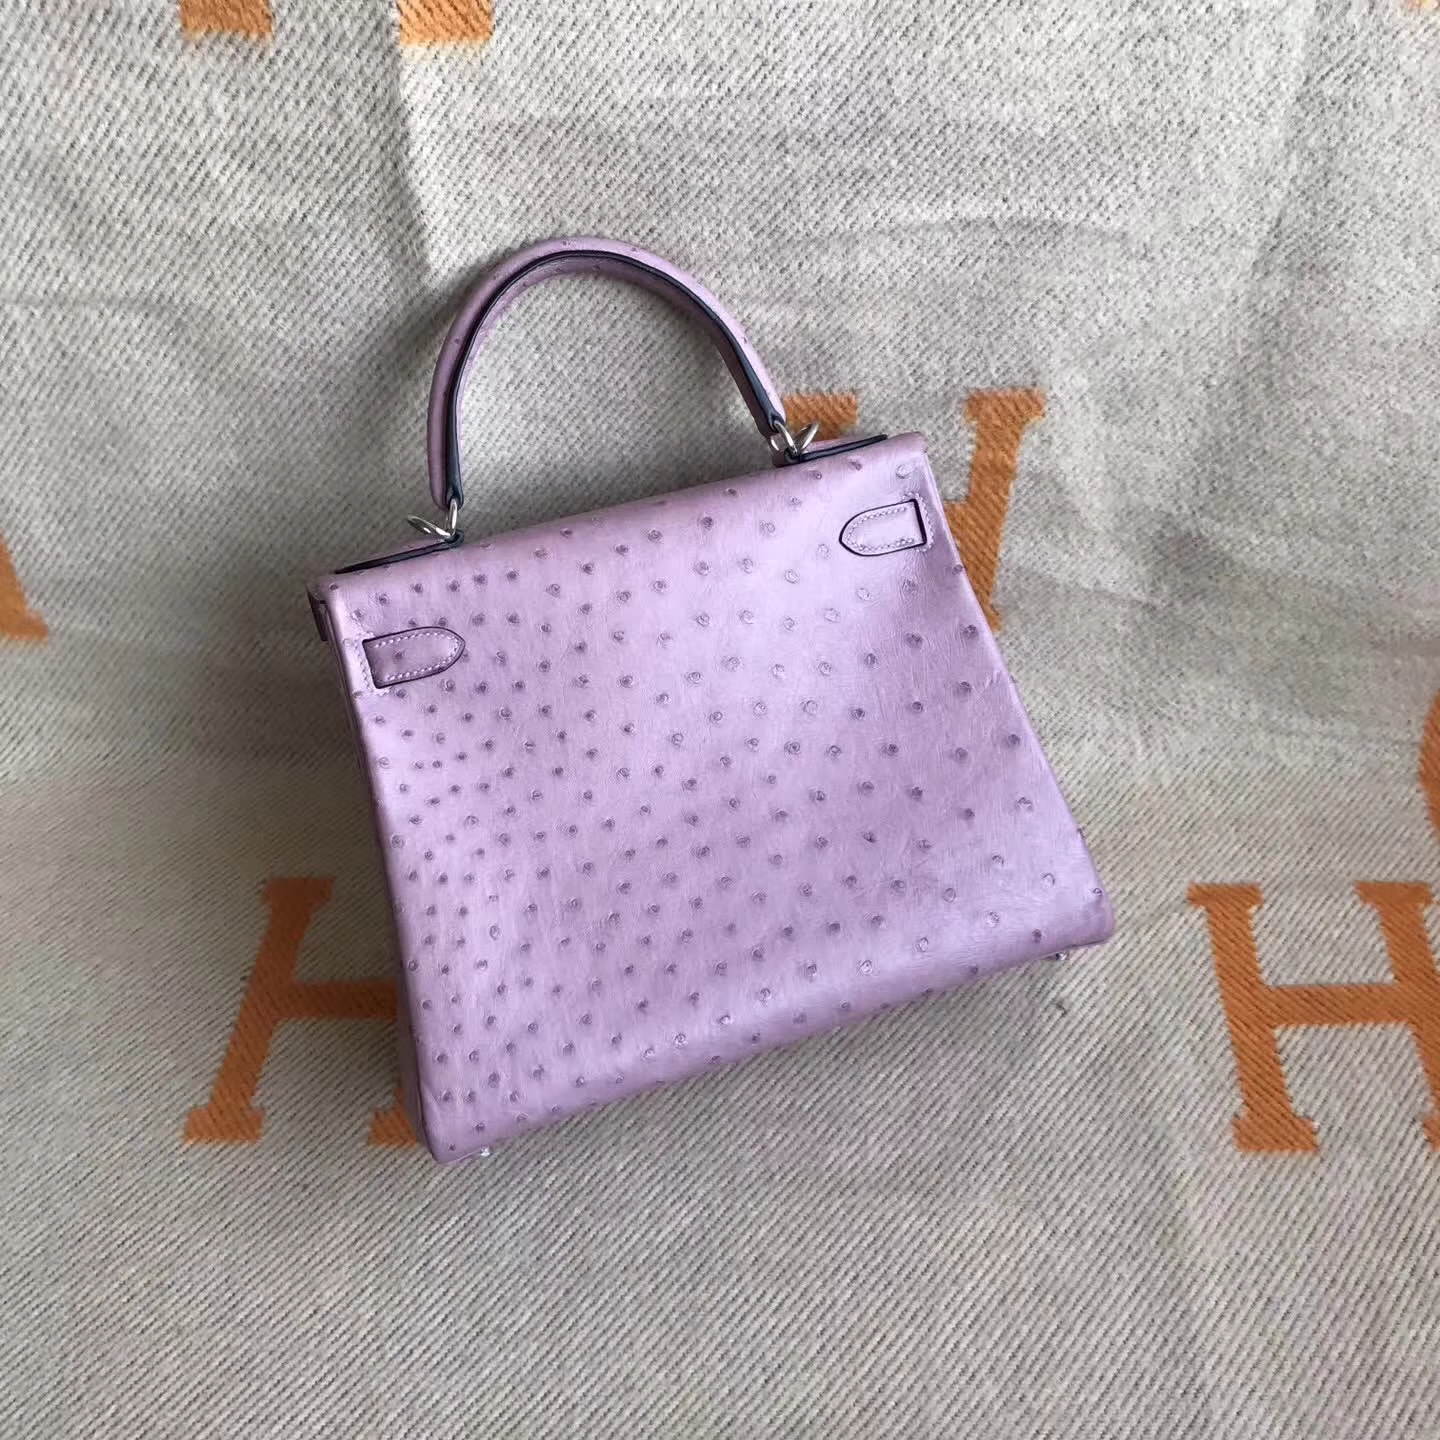 Wholesale Hermes Lavender Purple Ostrich Leather Kelly Bag28cm